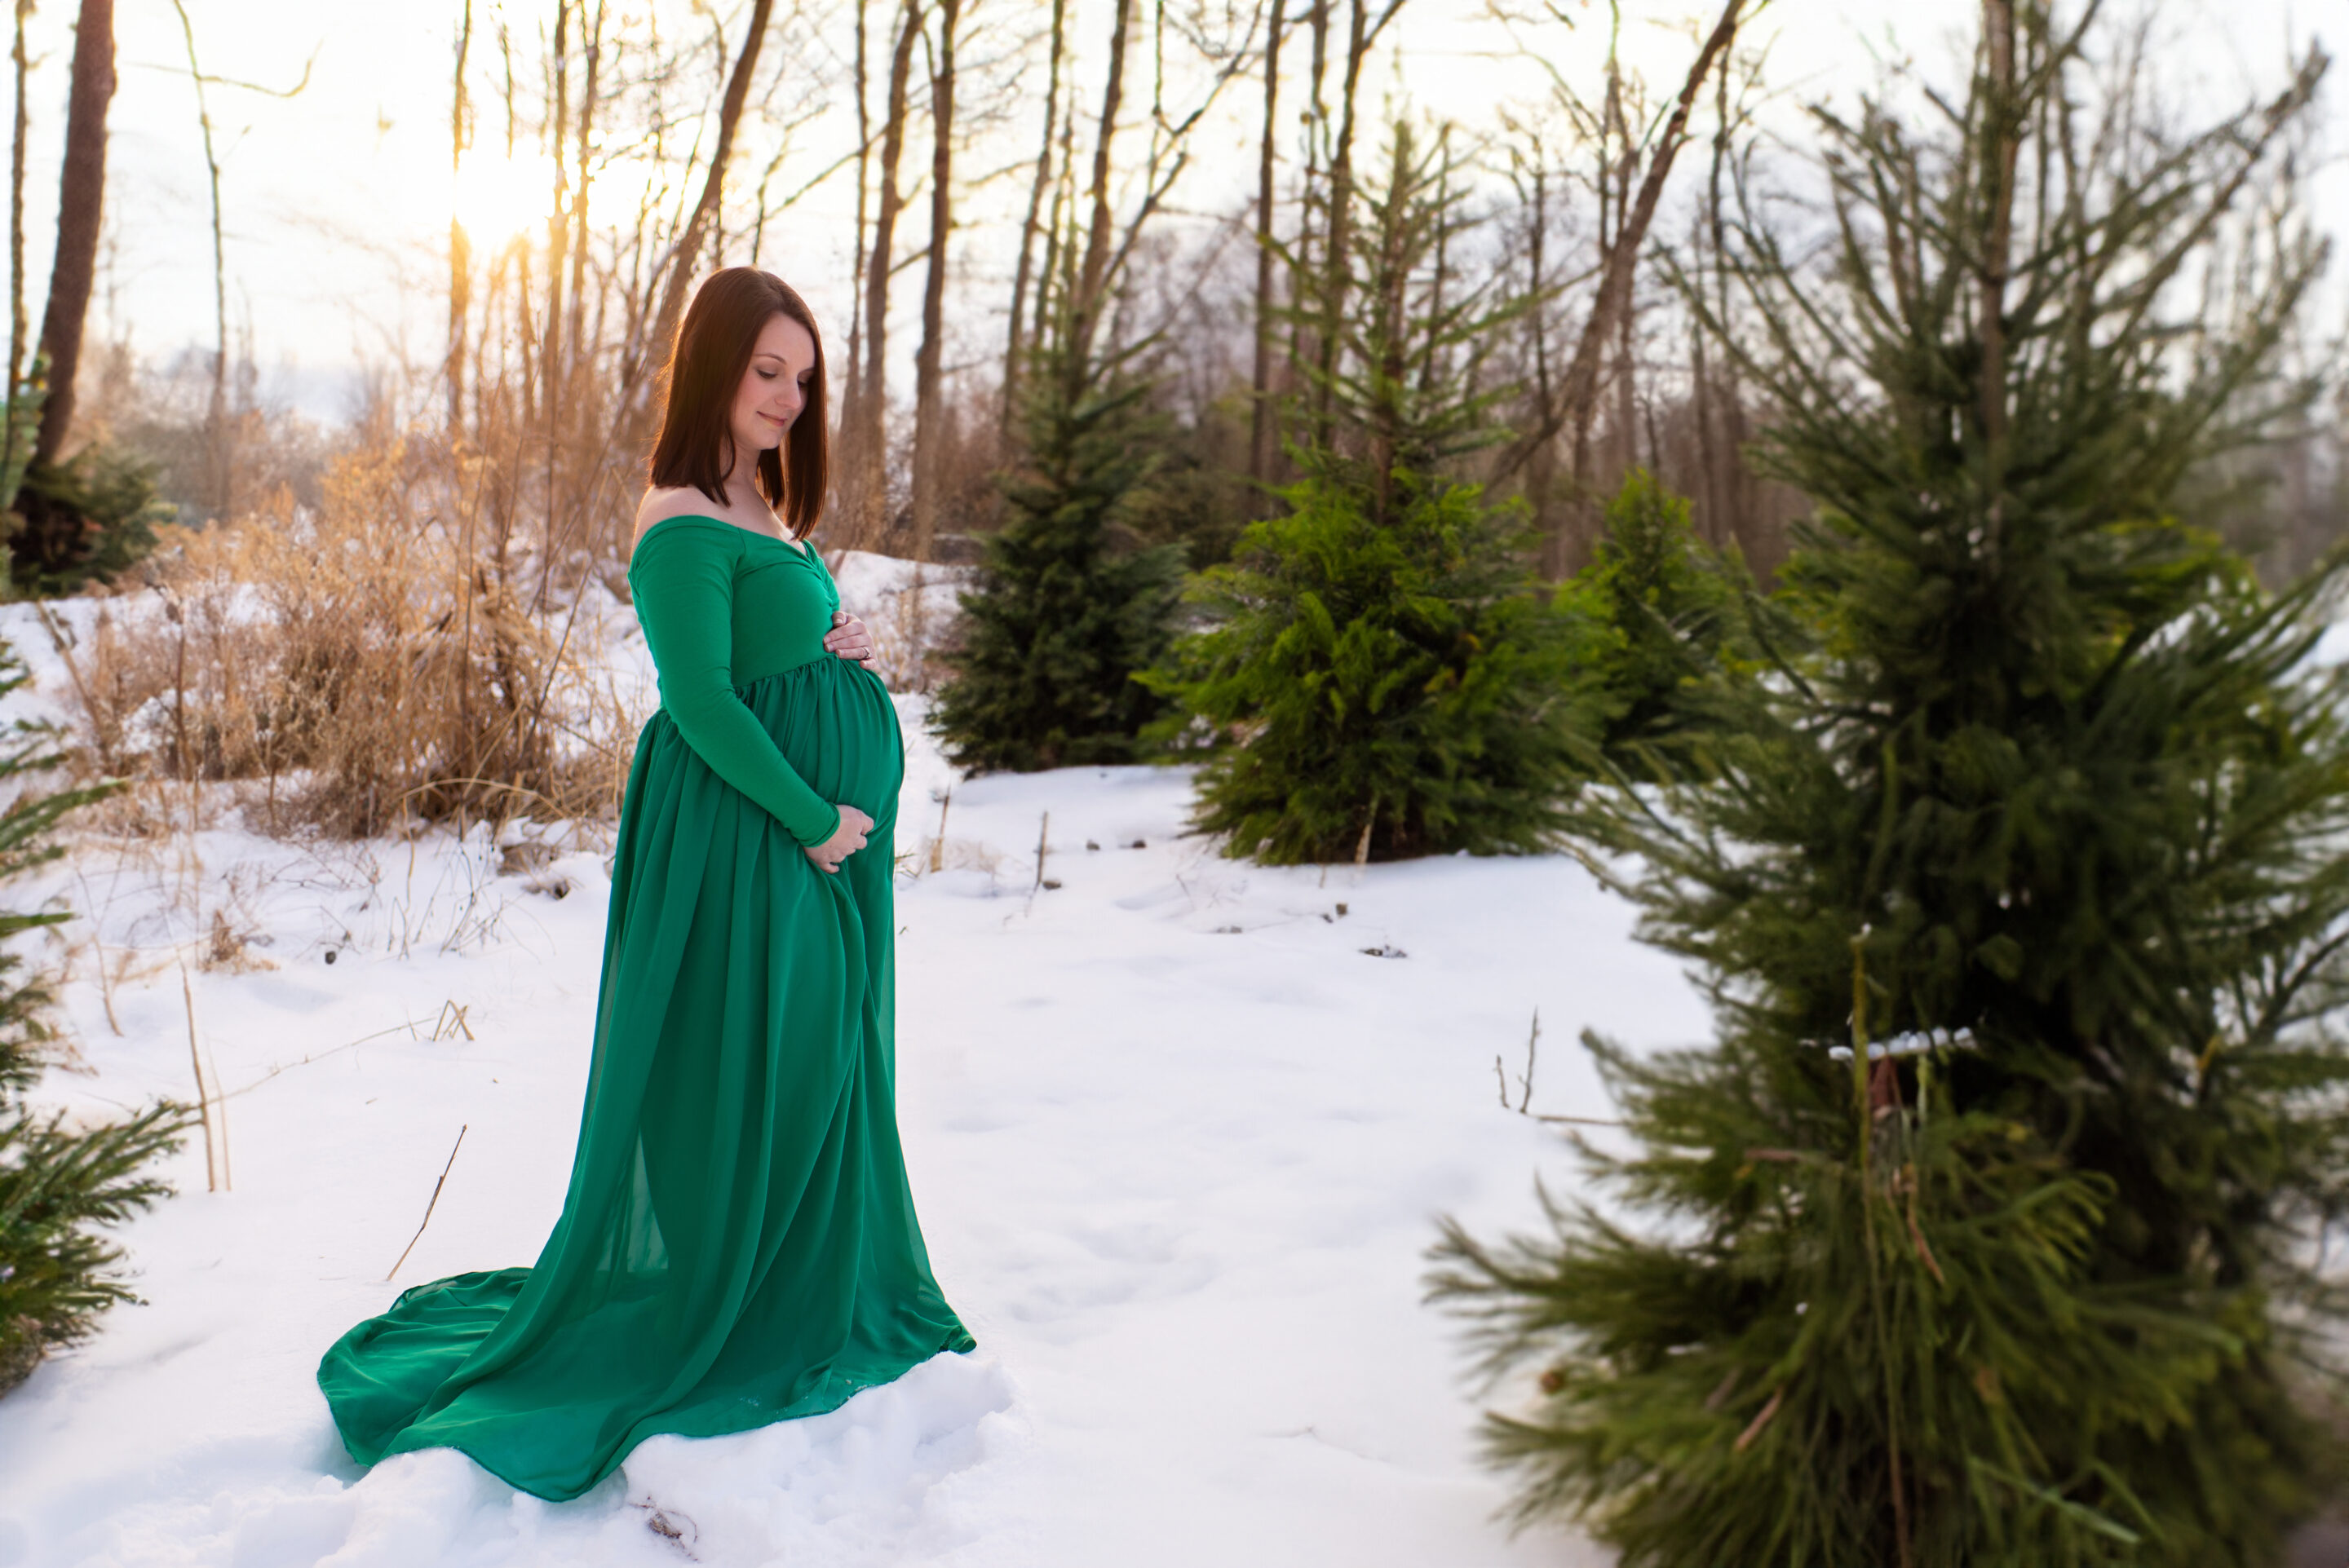 Capturing Joy with Christmas Tree Farm Maternity Photo Sessions